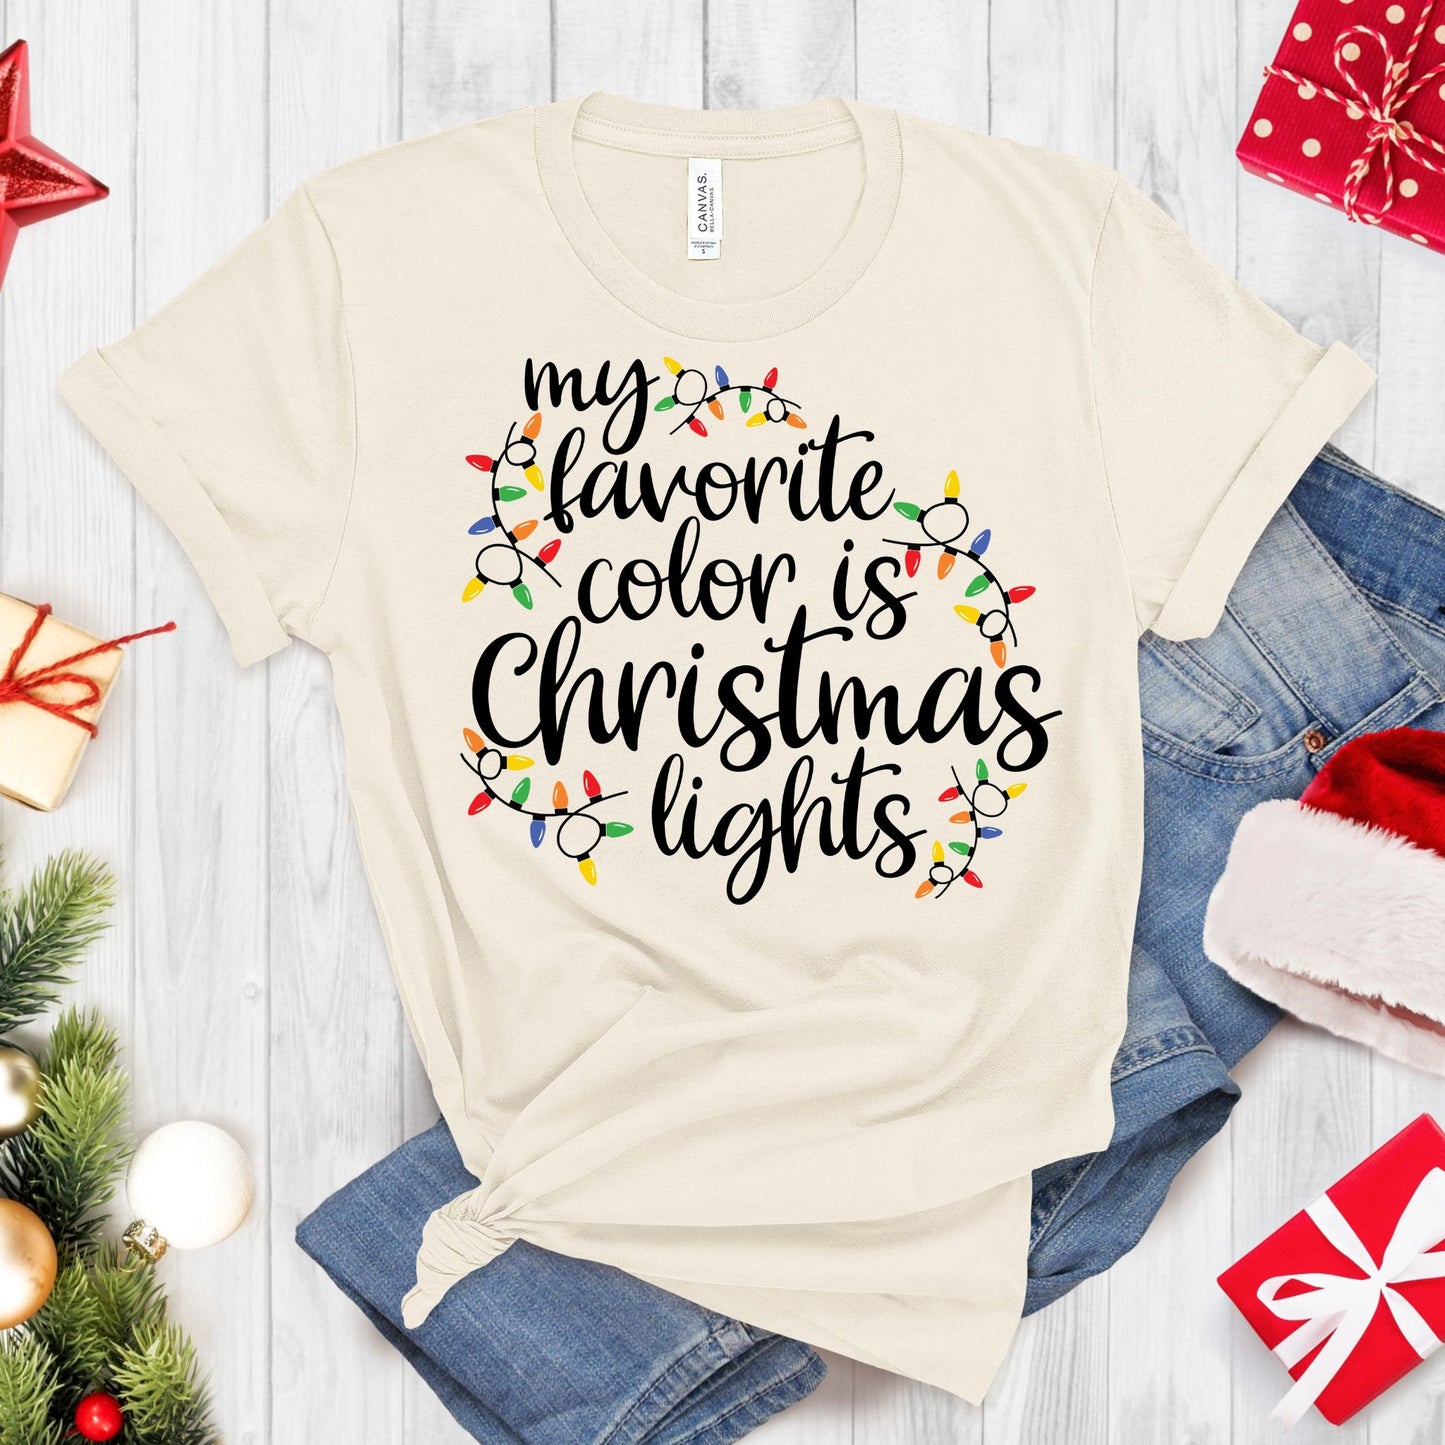 My Favorite Color is Christmas Lights Tee